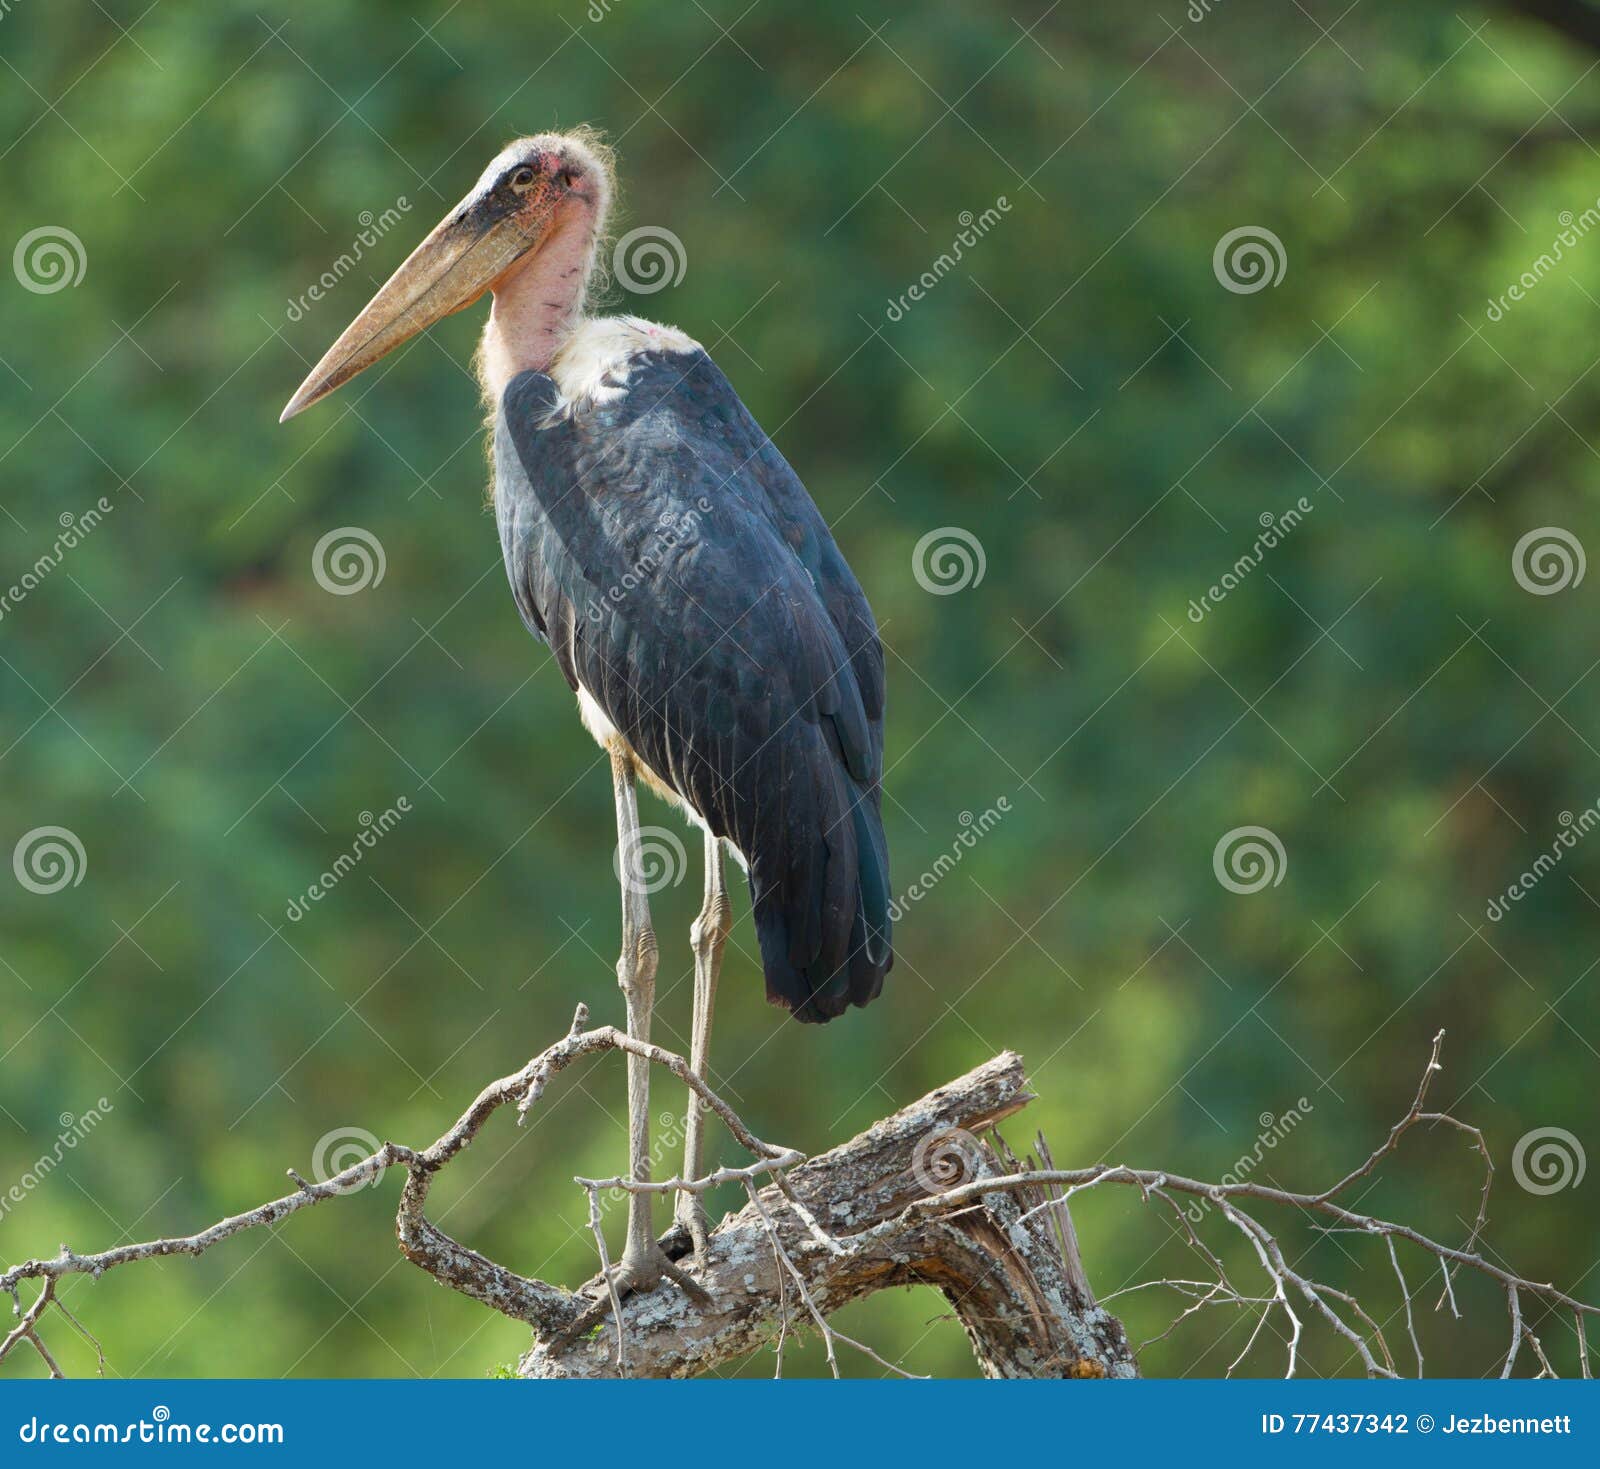 marabou stork perched